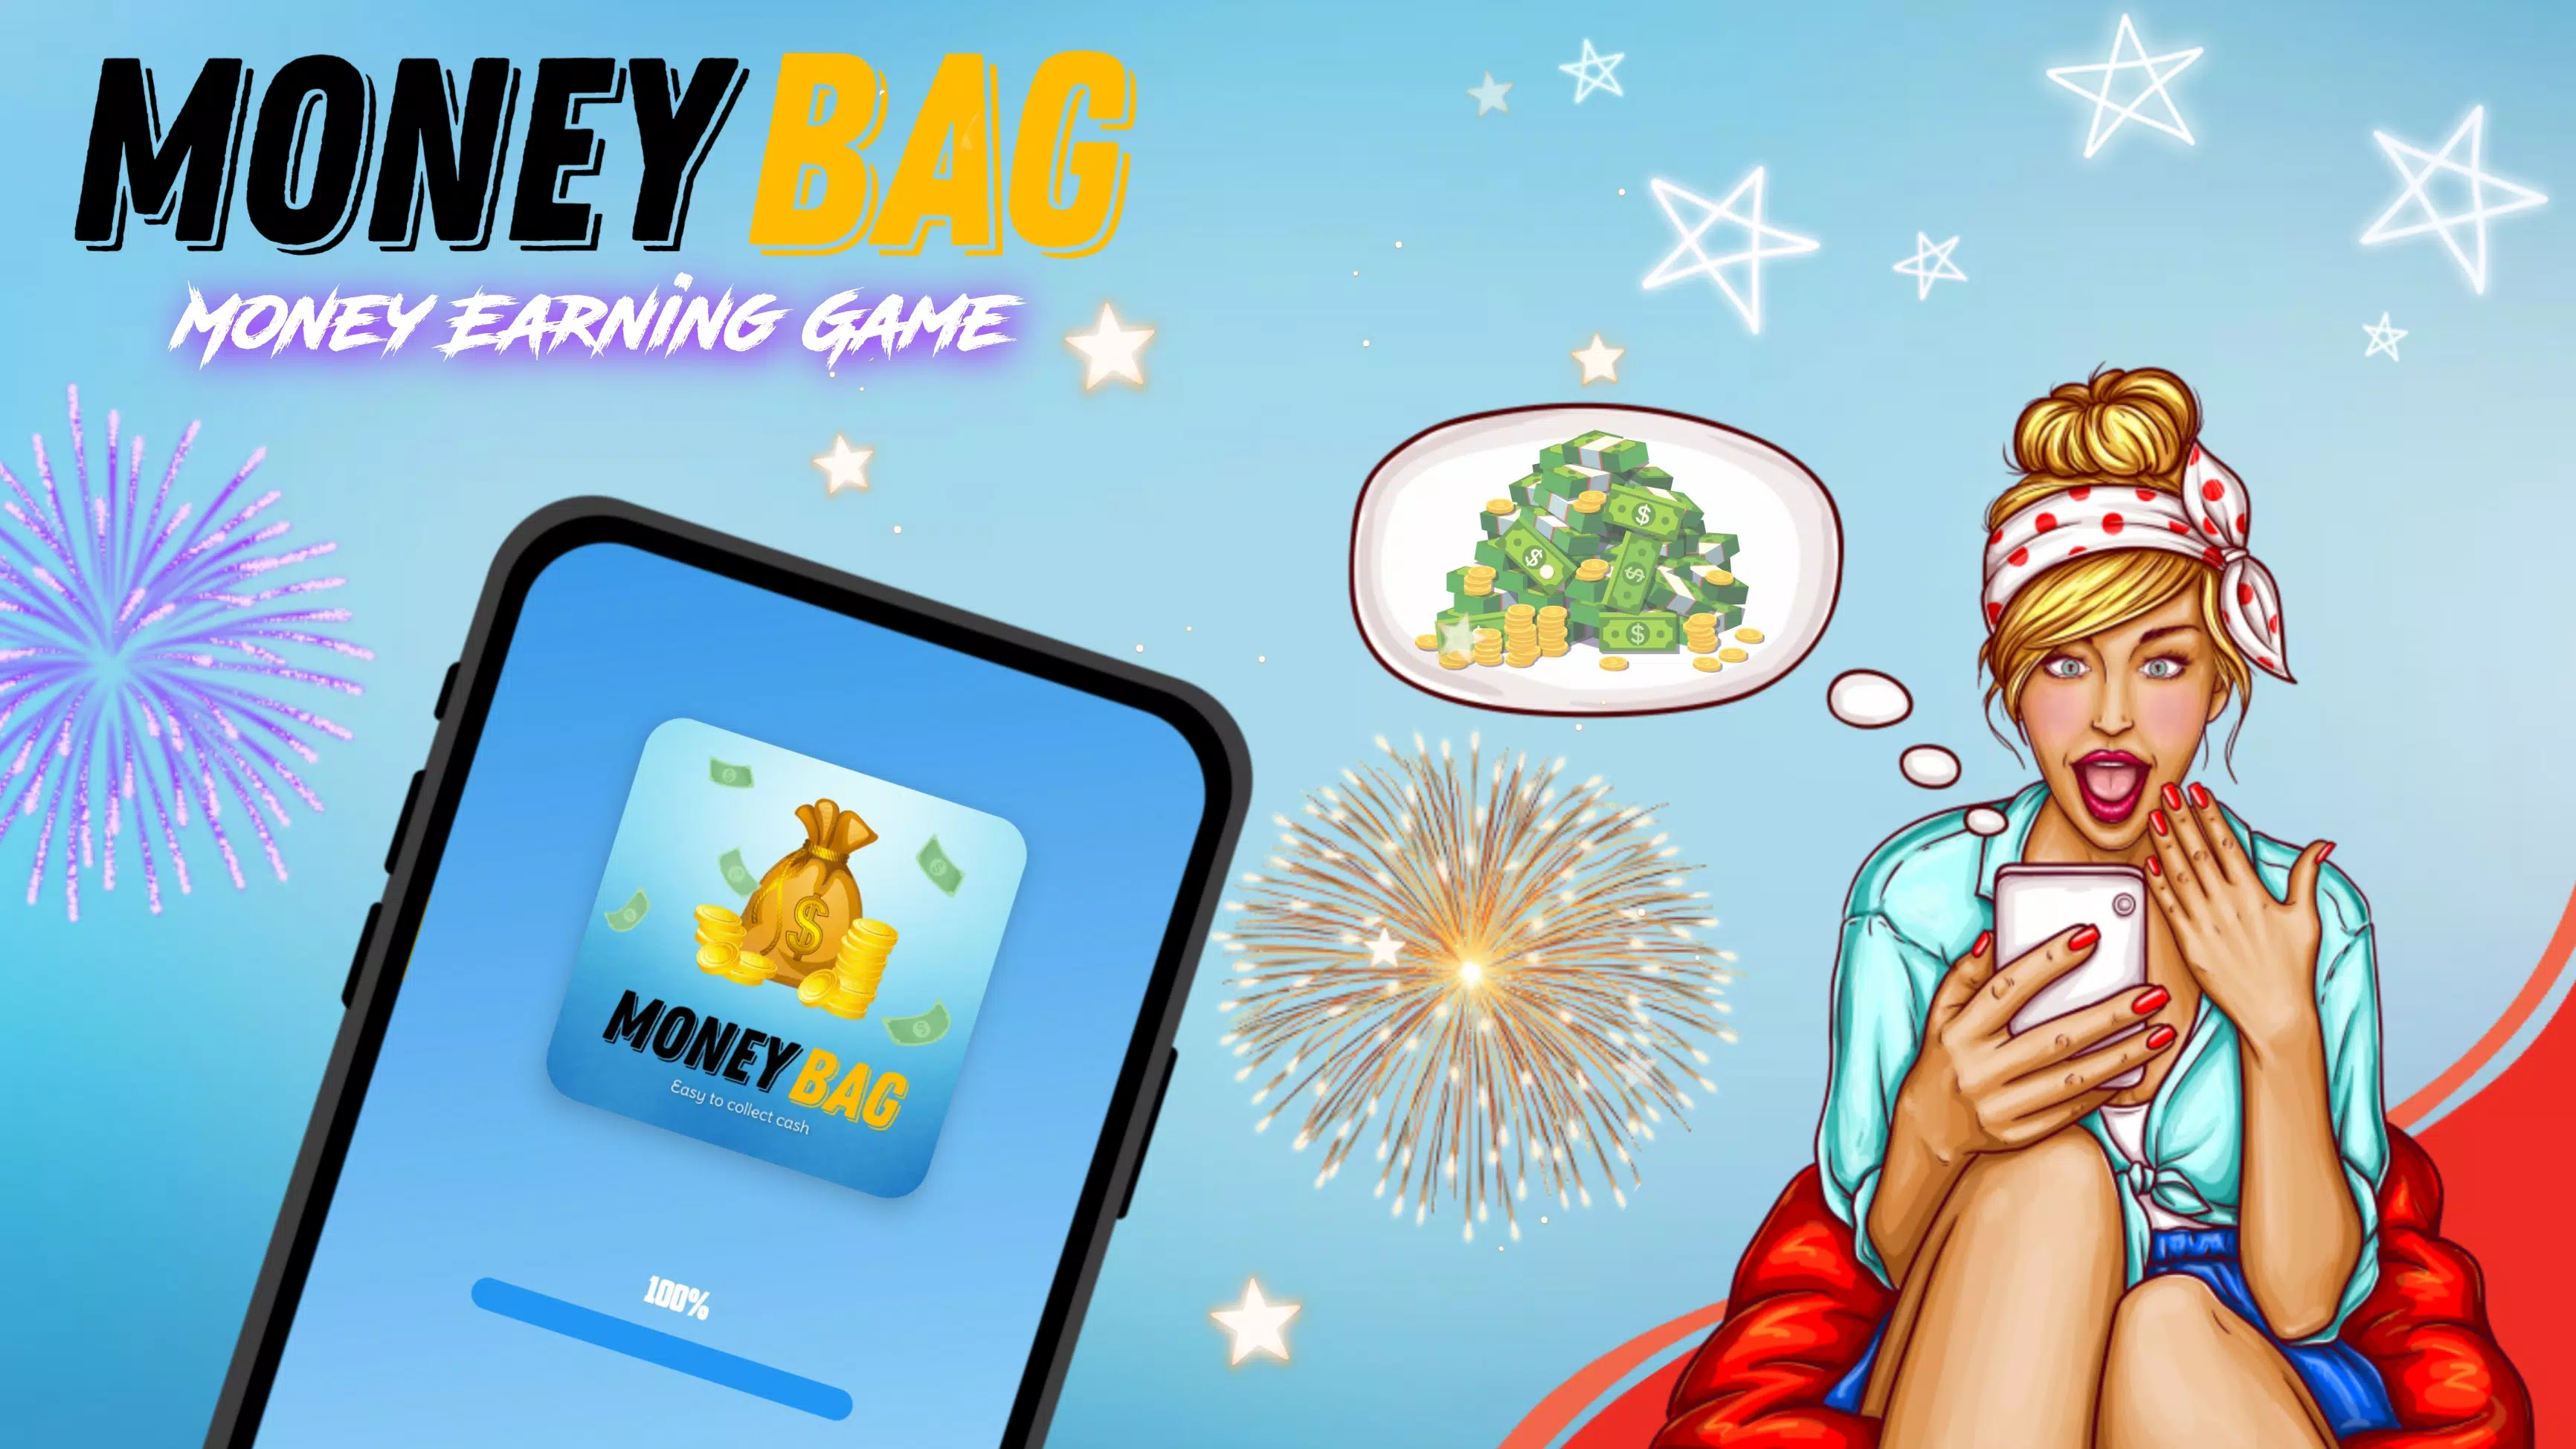 Money Bag para Android - Download